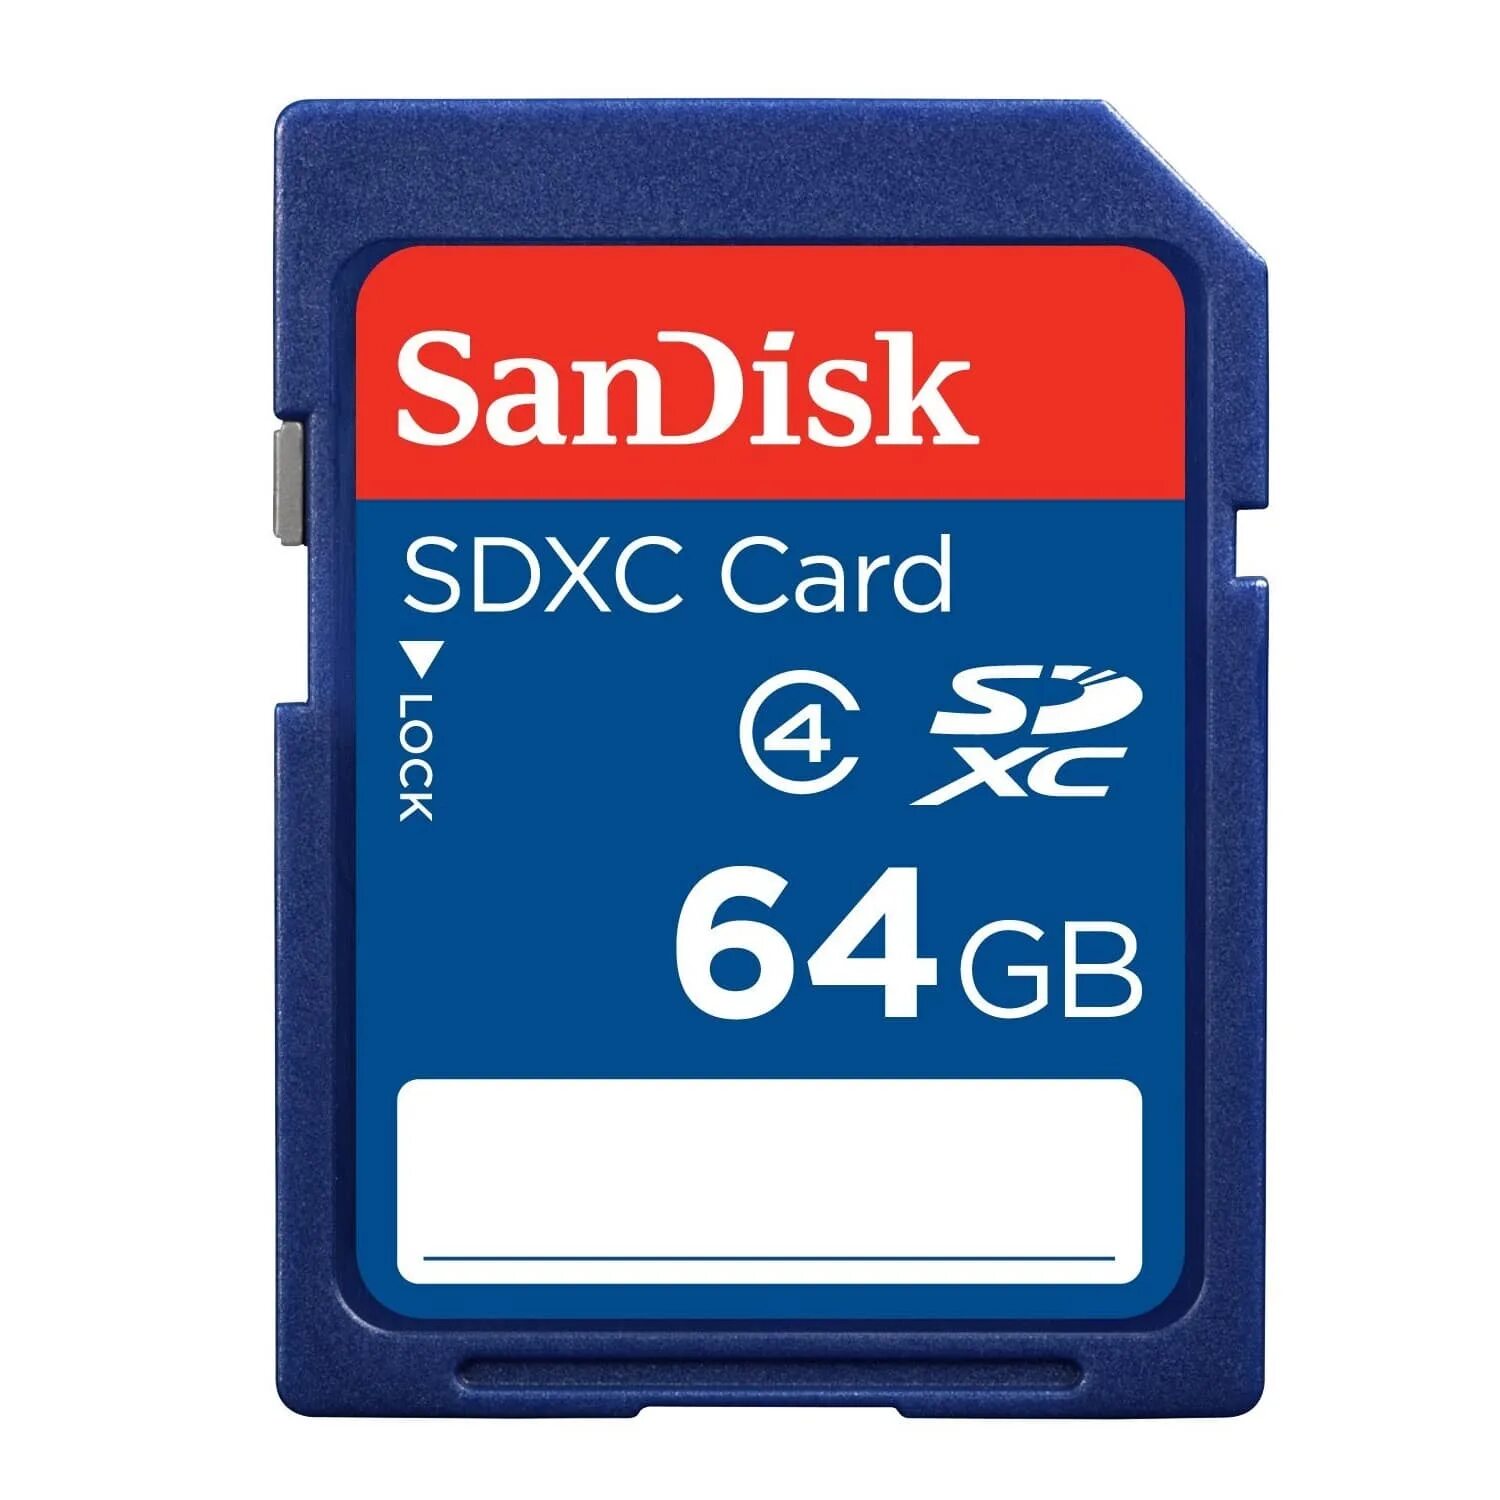 Cd карта купить. Карта памяти SANDISK SDHC Card 4gb class 2. Карта памяти SANDISK SDHC Card 16gb class 4. САНДИСК СД 64 ГБ. SANDISK 64gb SDXC class 4 Memory Card.